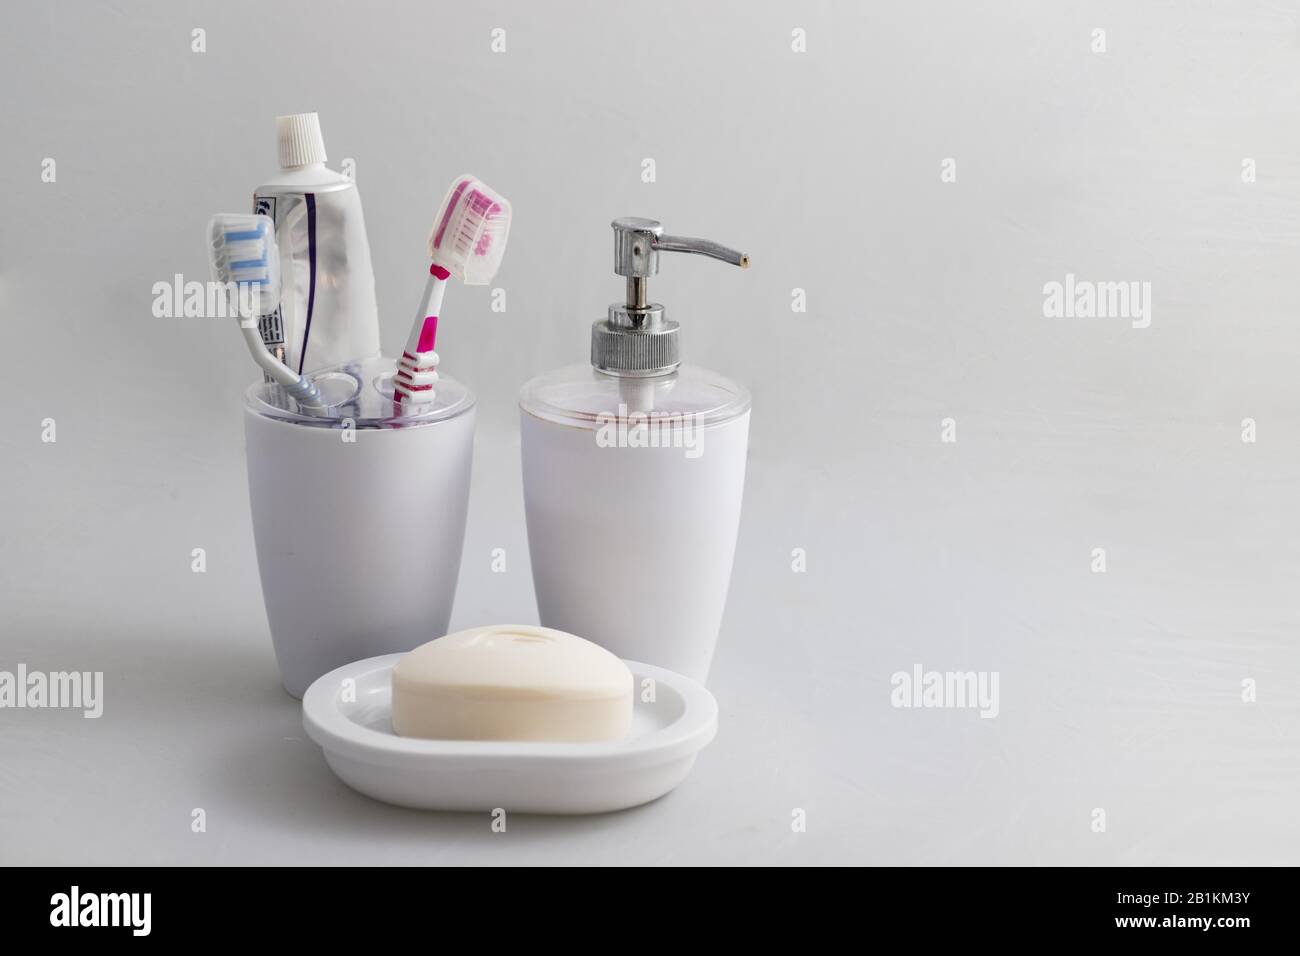 https://c8.alamy.com/comp/2B1KM3Y/toothbrush-holder-liquid-soap-and-soap-2B1KM3Y.jpg